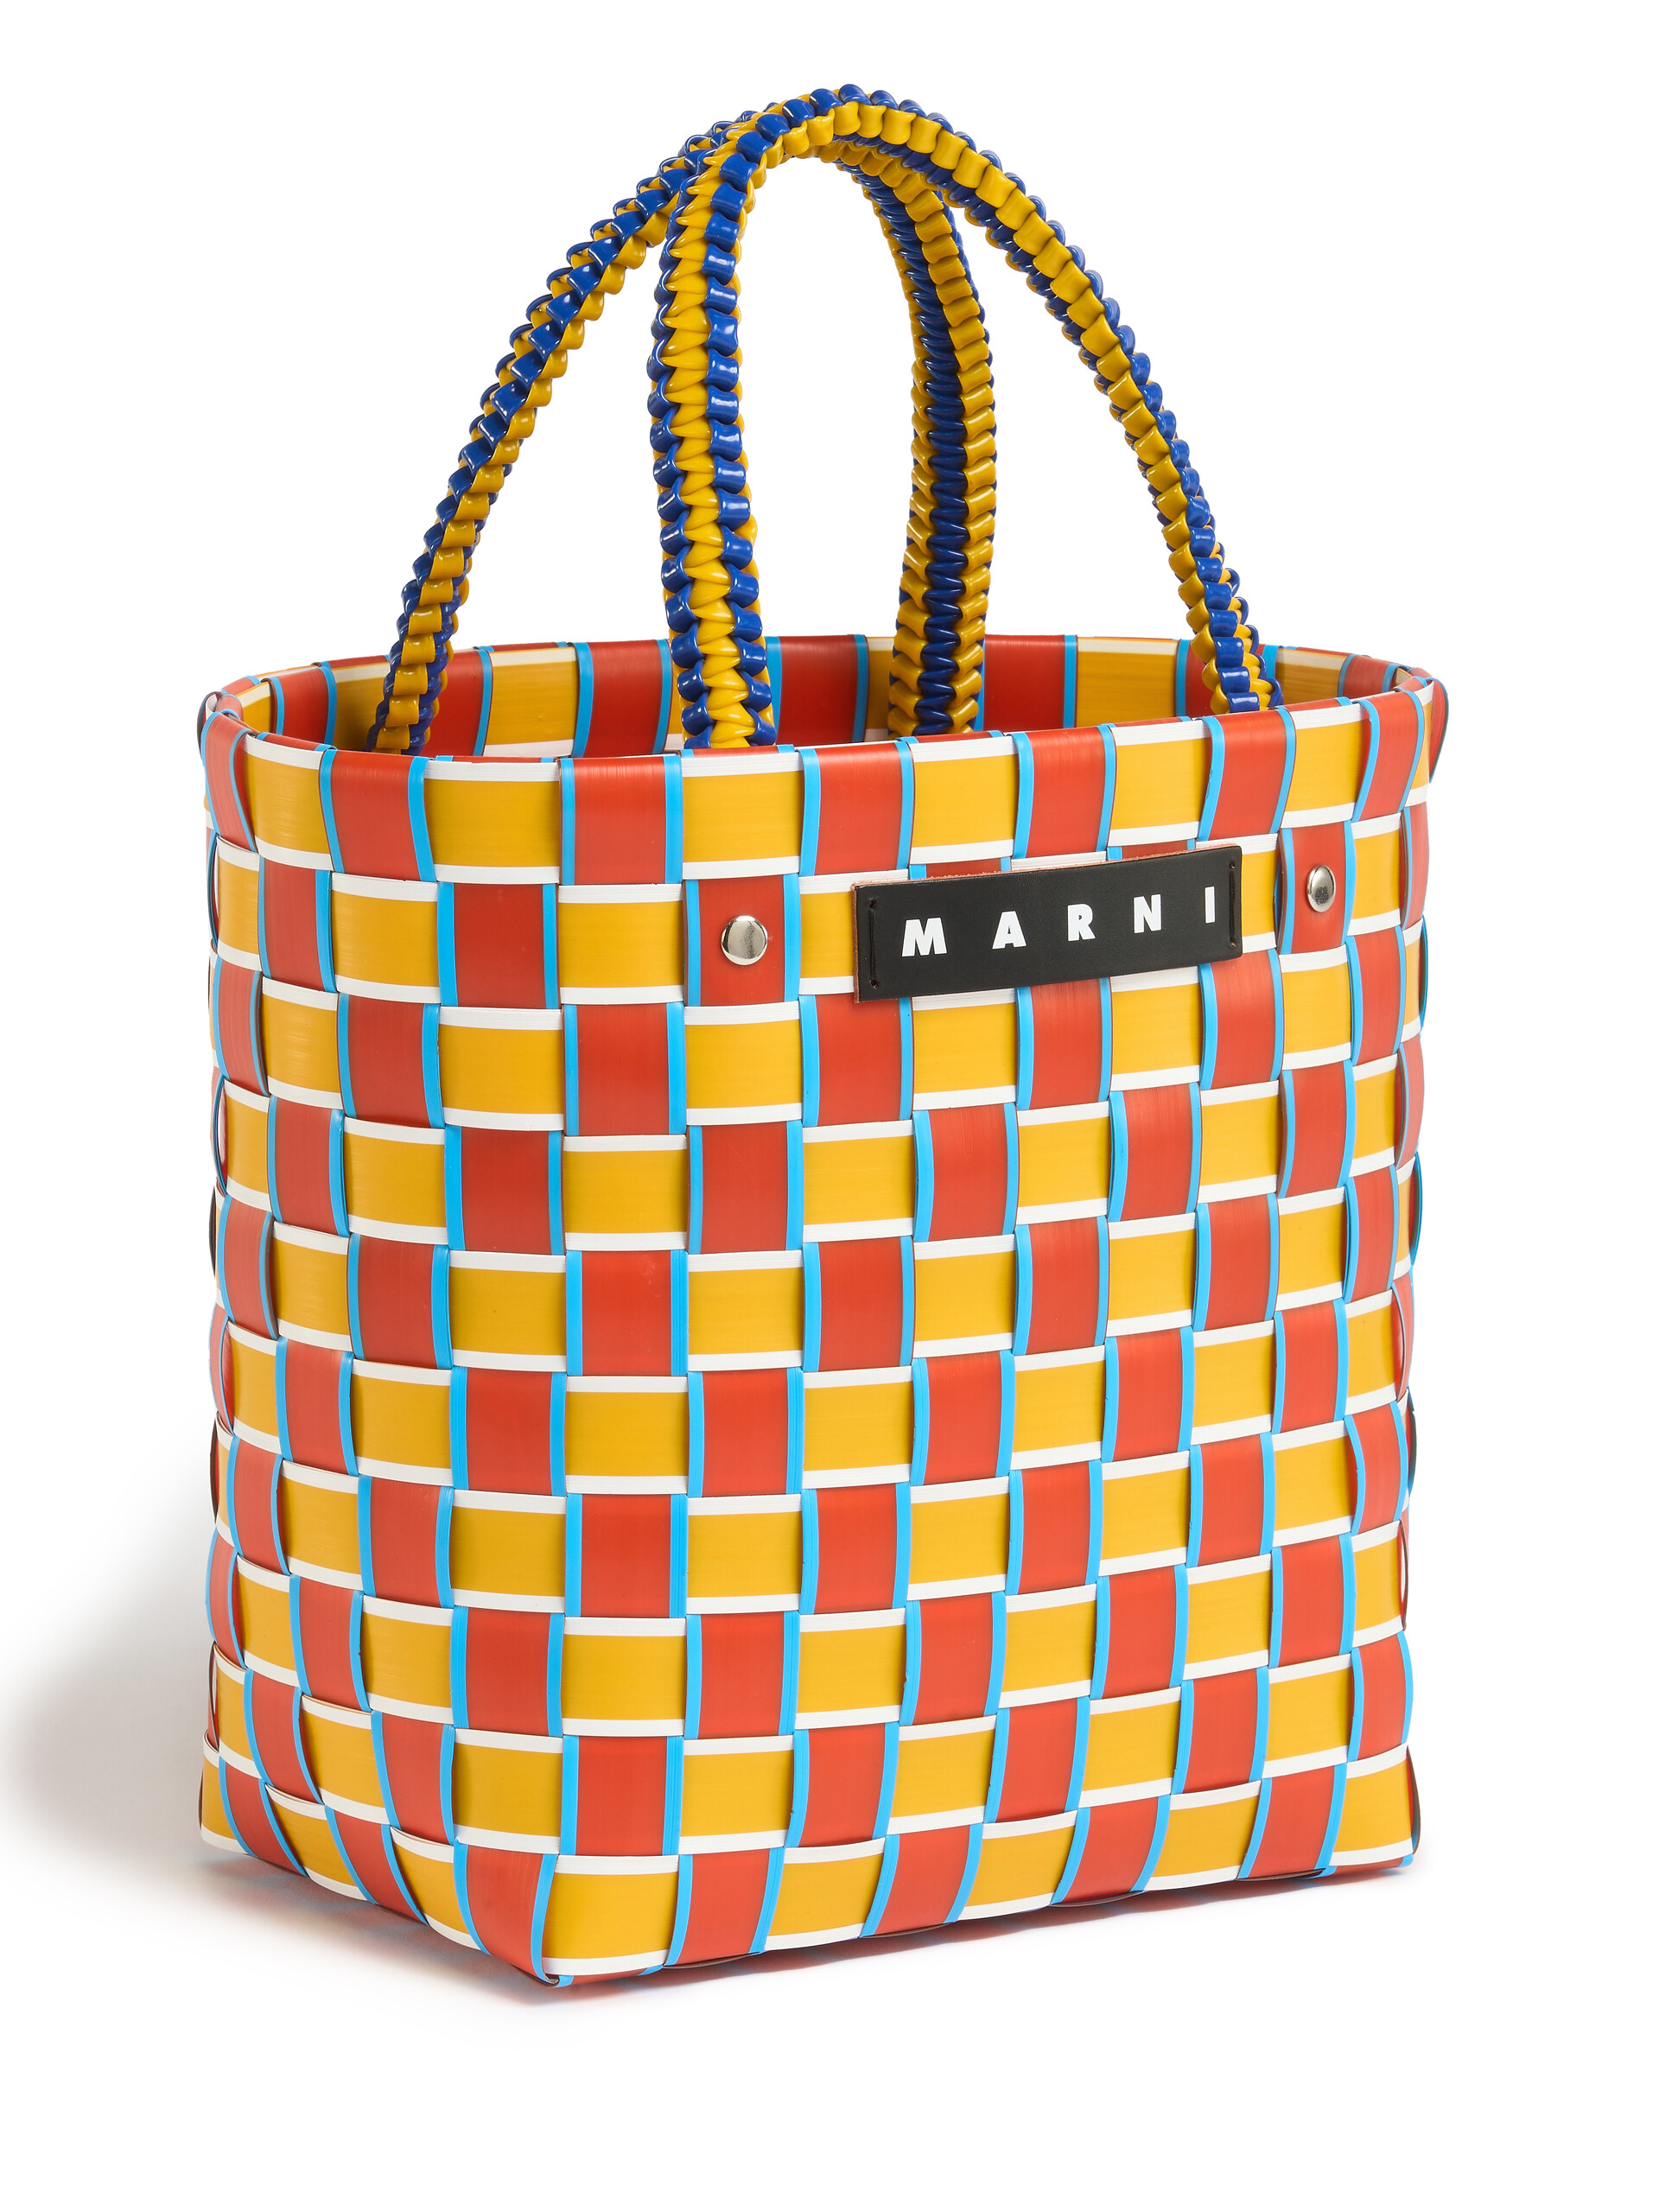 Pink and green MARNI MARKET TAPE BASKET bag - Shopping Bags - Image 4